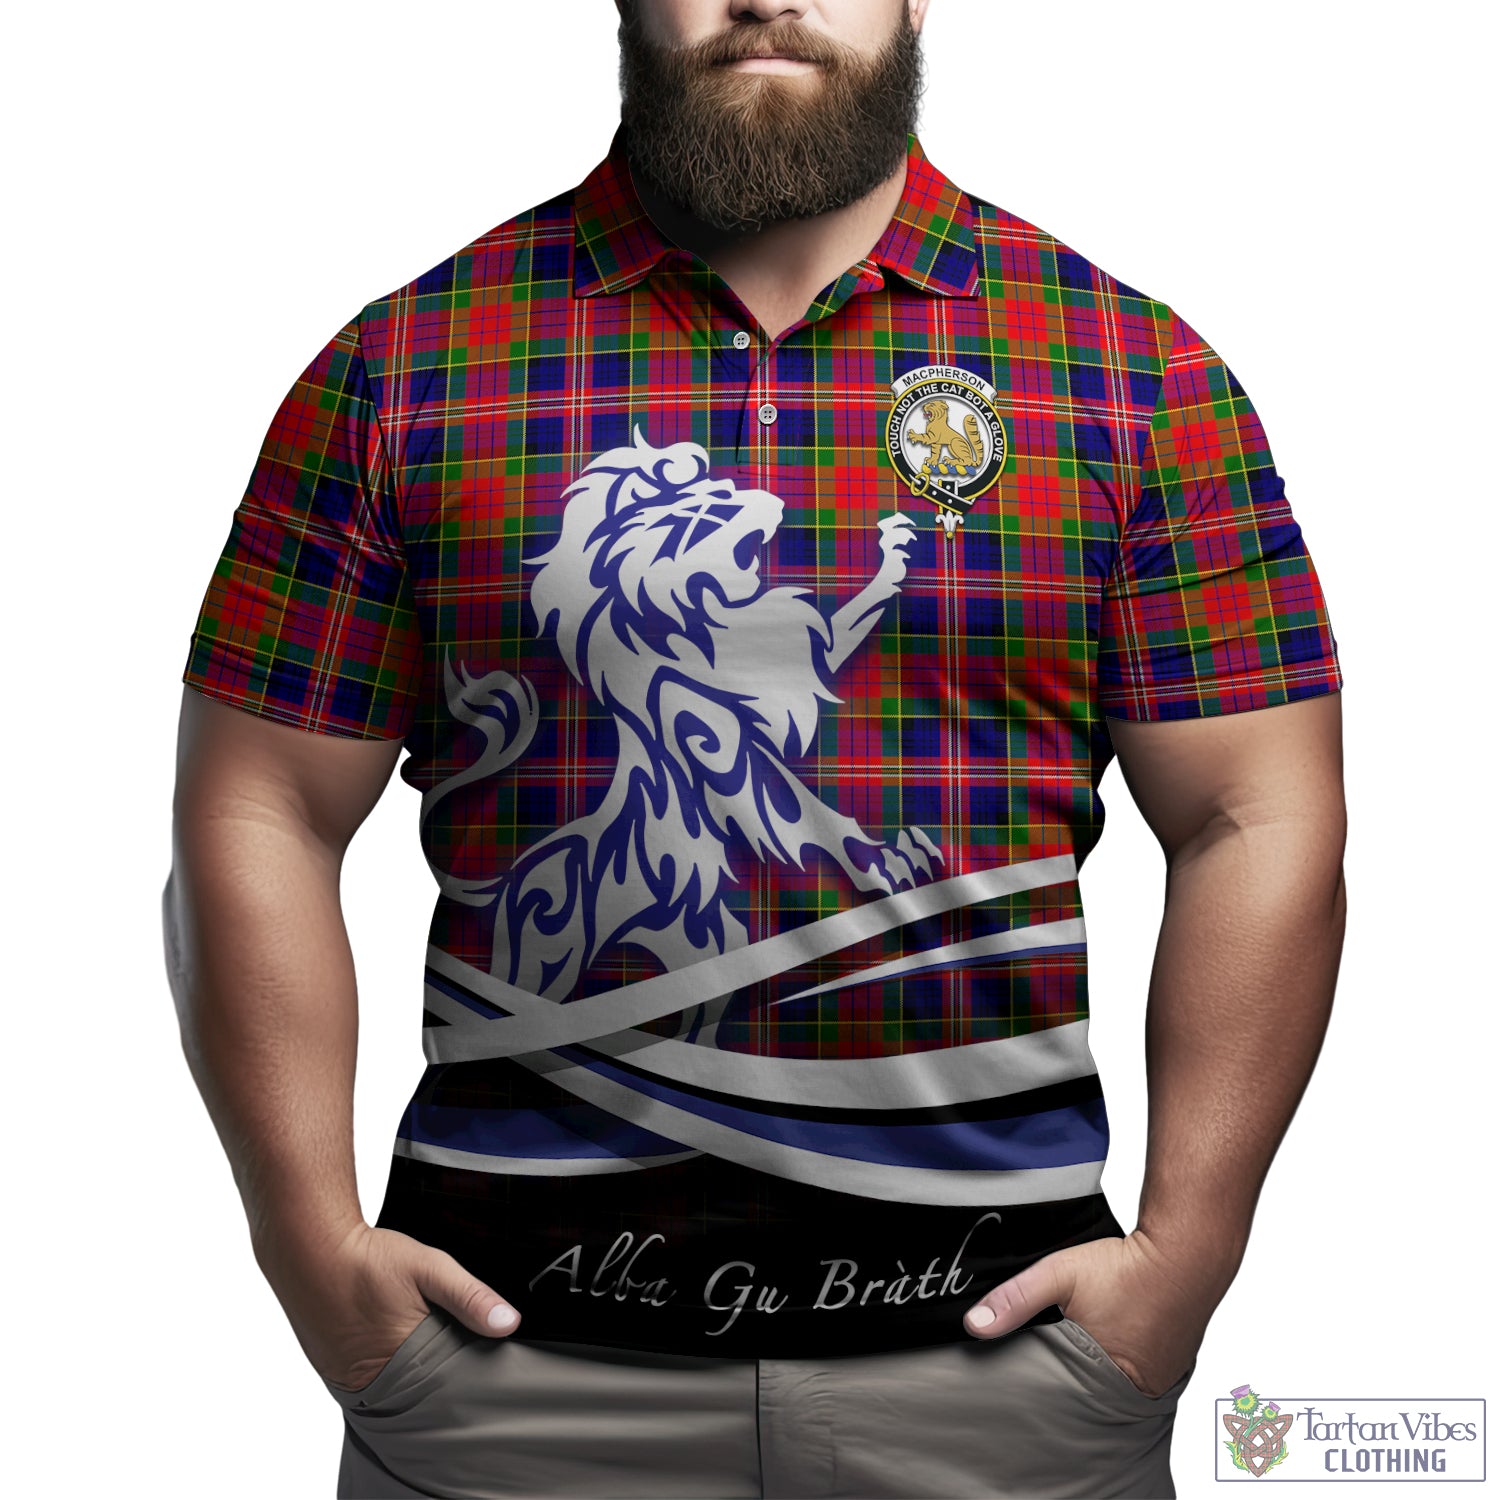 macpherson-modern-tartan-polo-shirt-with-alba-gu-brath-regal-lion-emblem